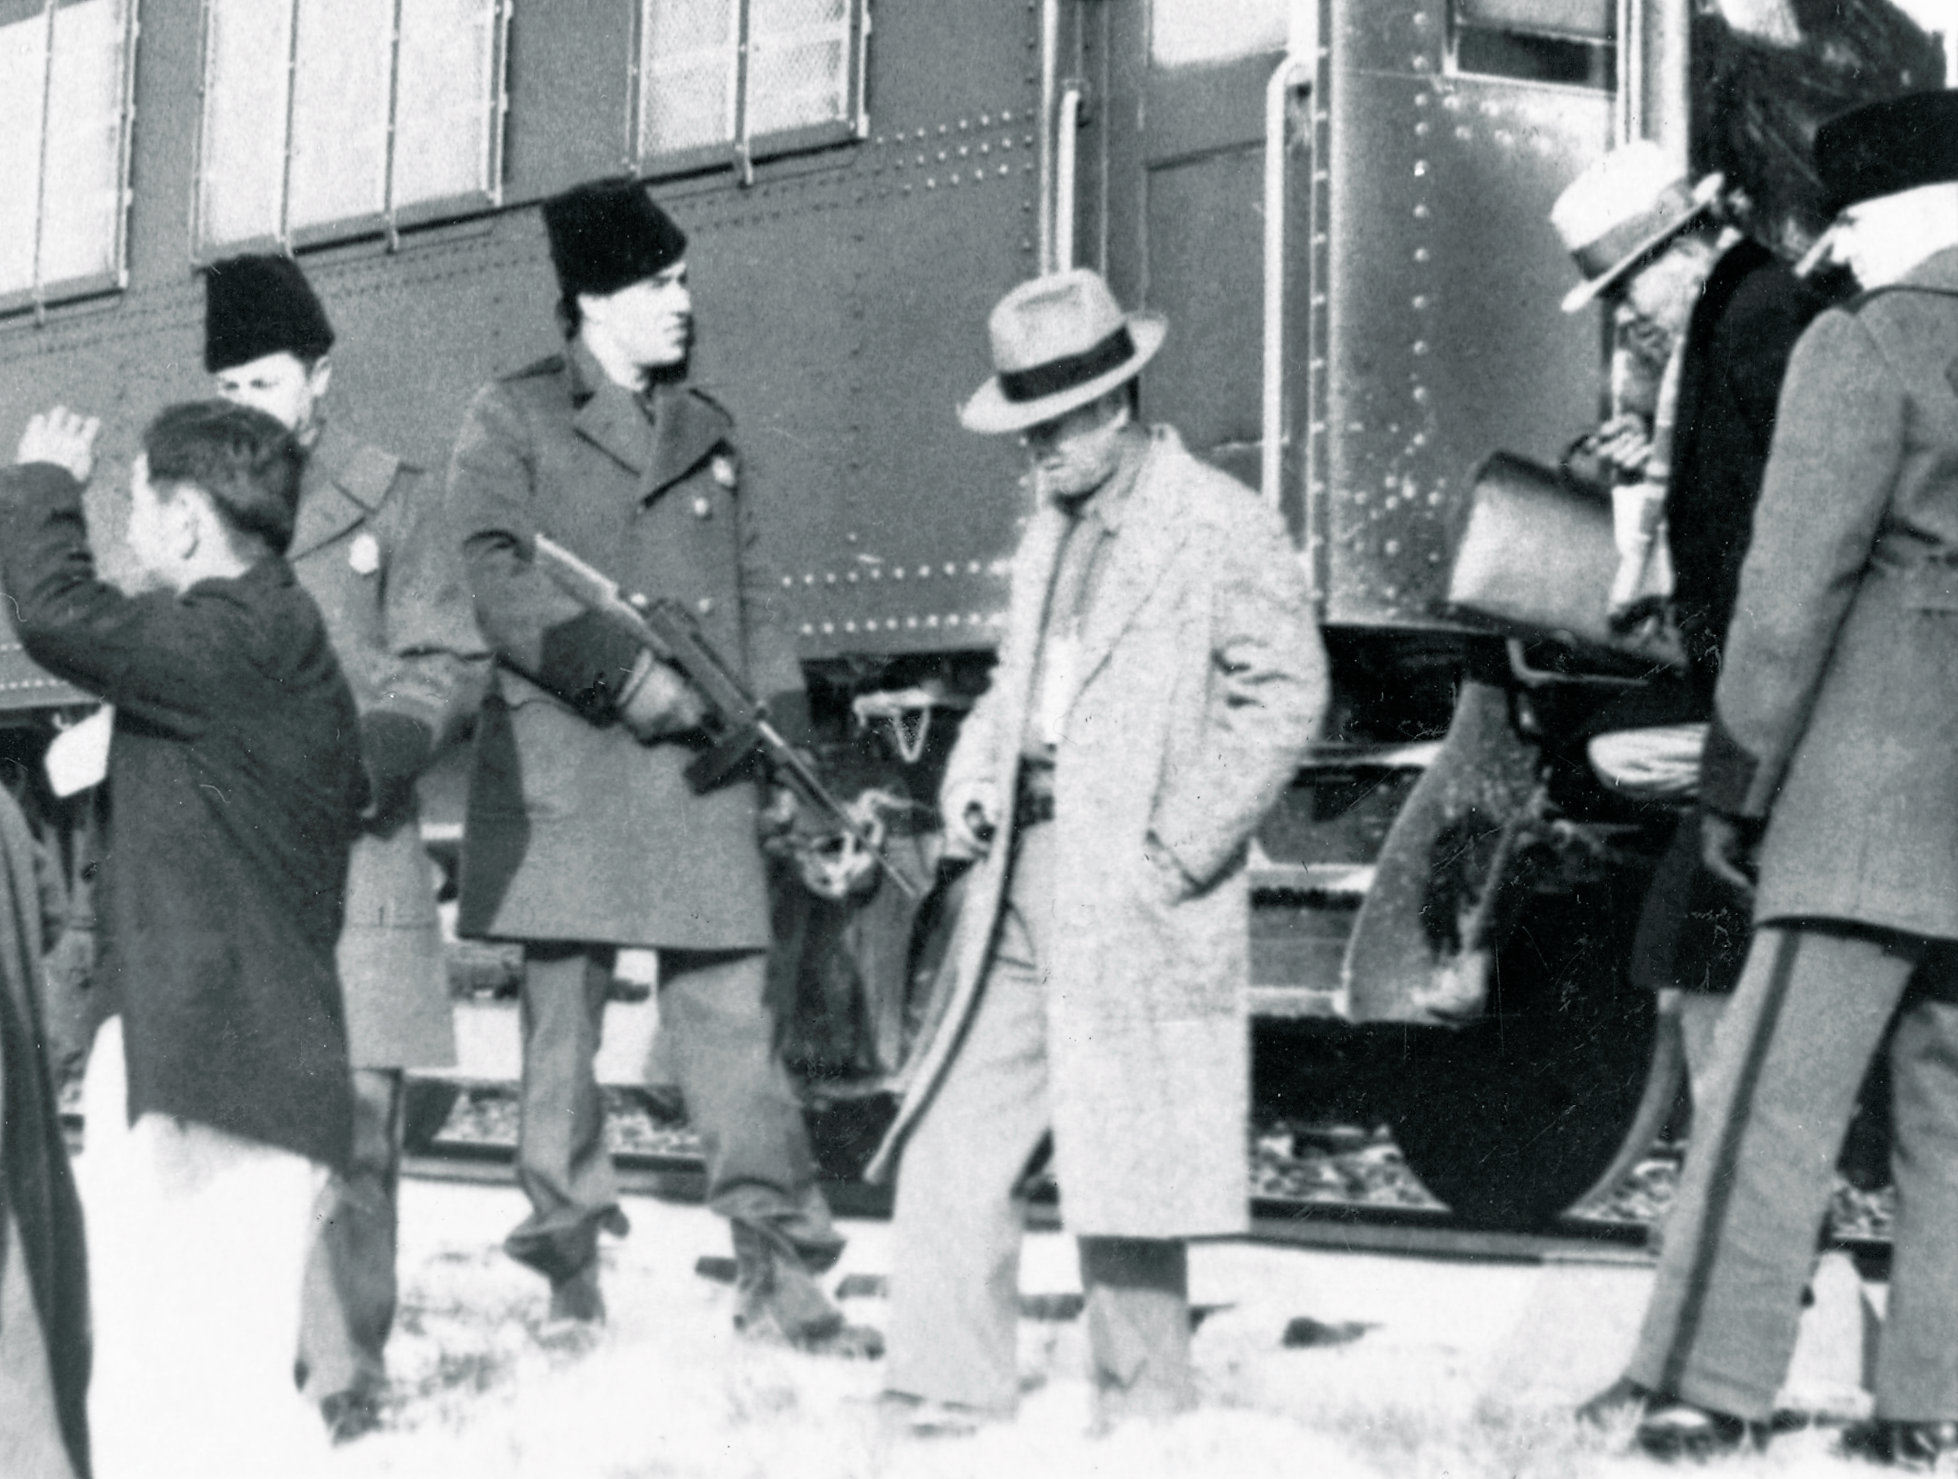 Issei men arriving at Bismarck on train